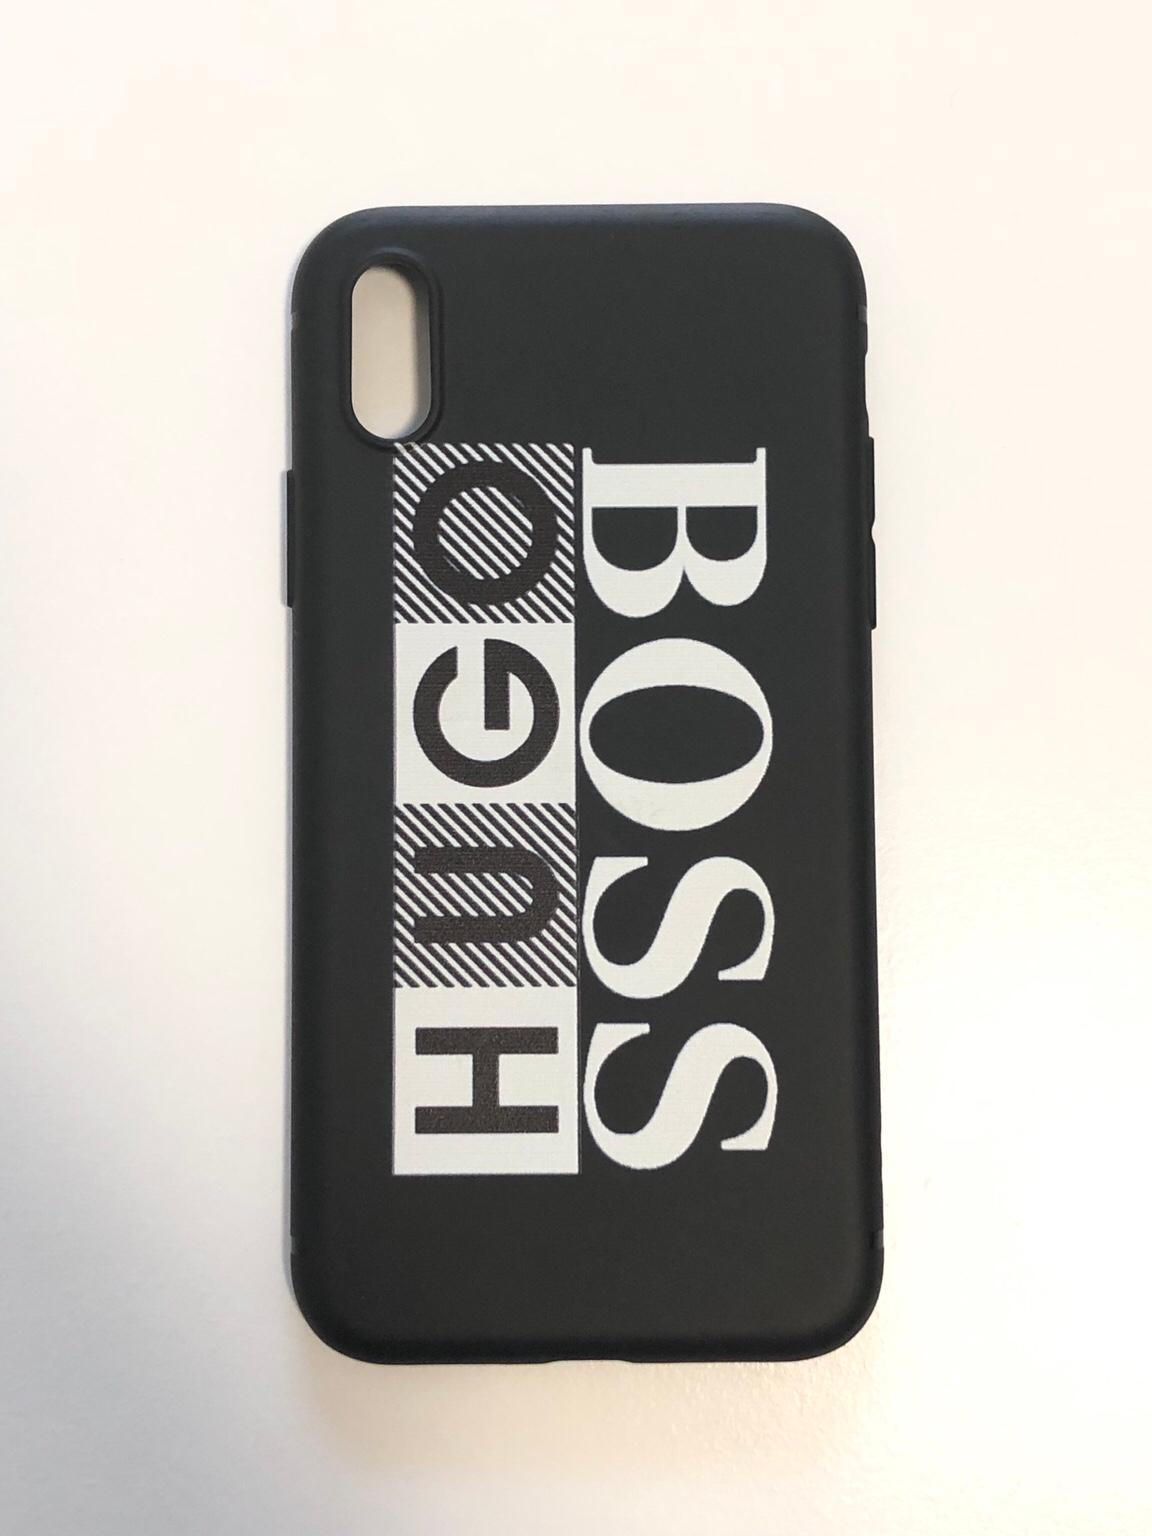 hugo boss phone case iphone x